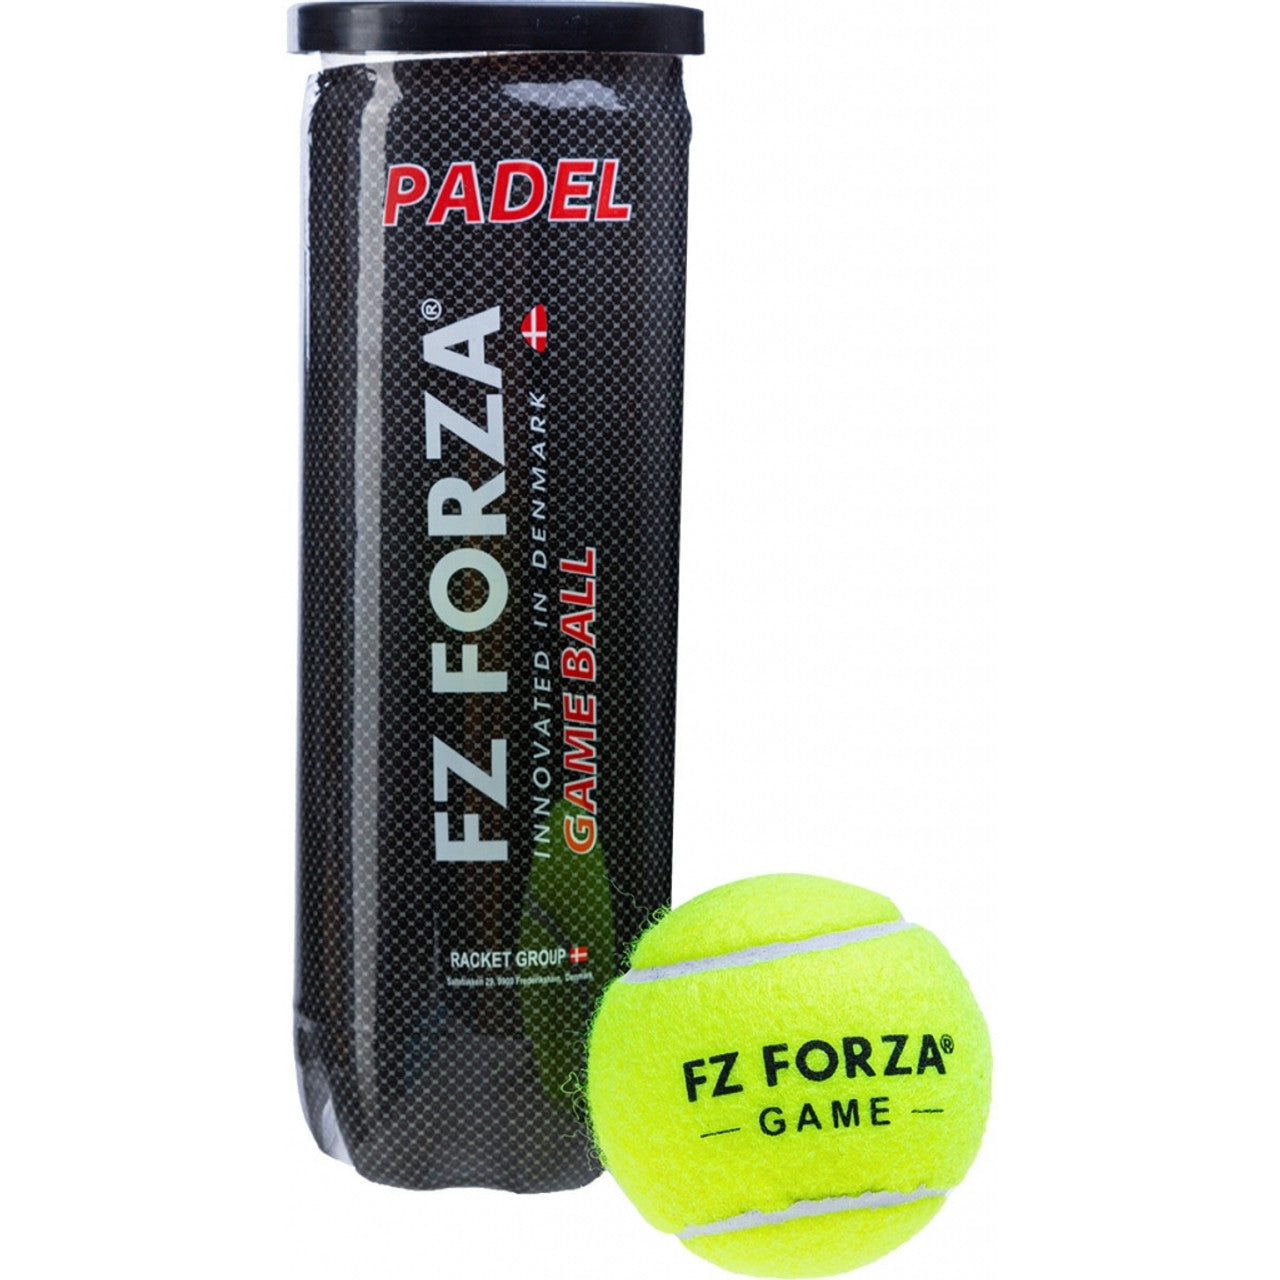 FZ Forza Padel Game Ball